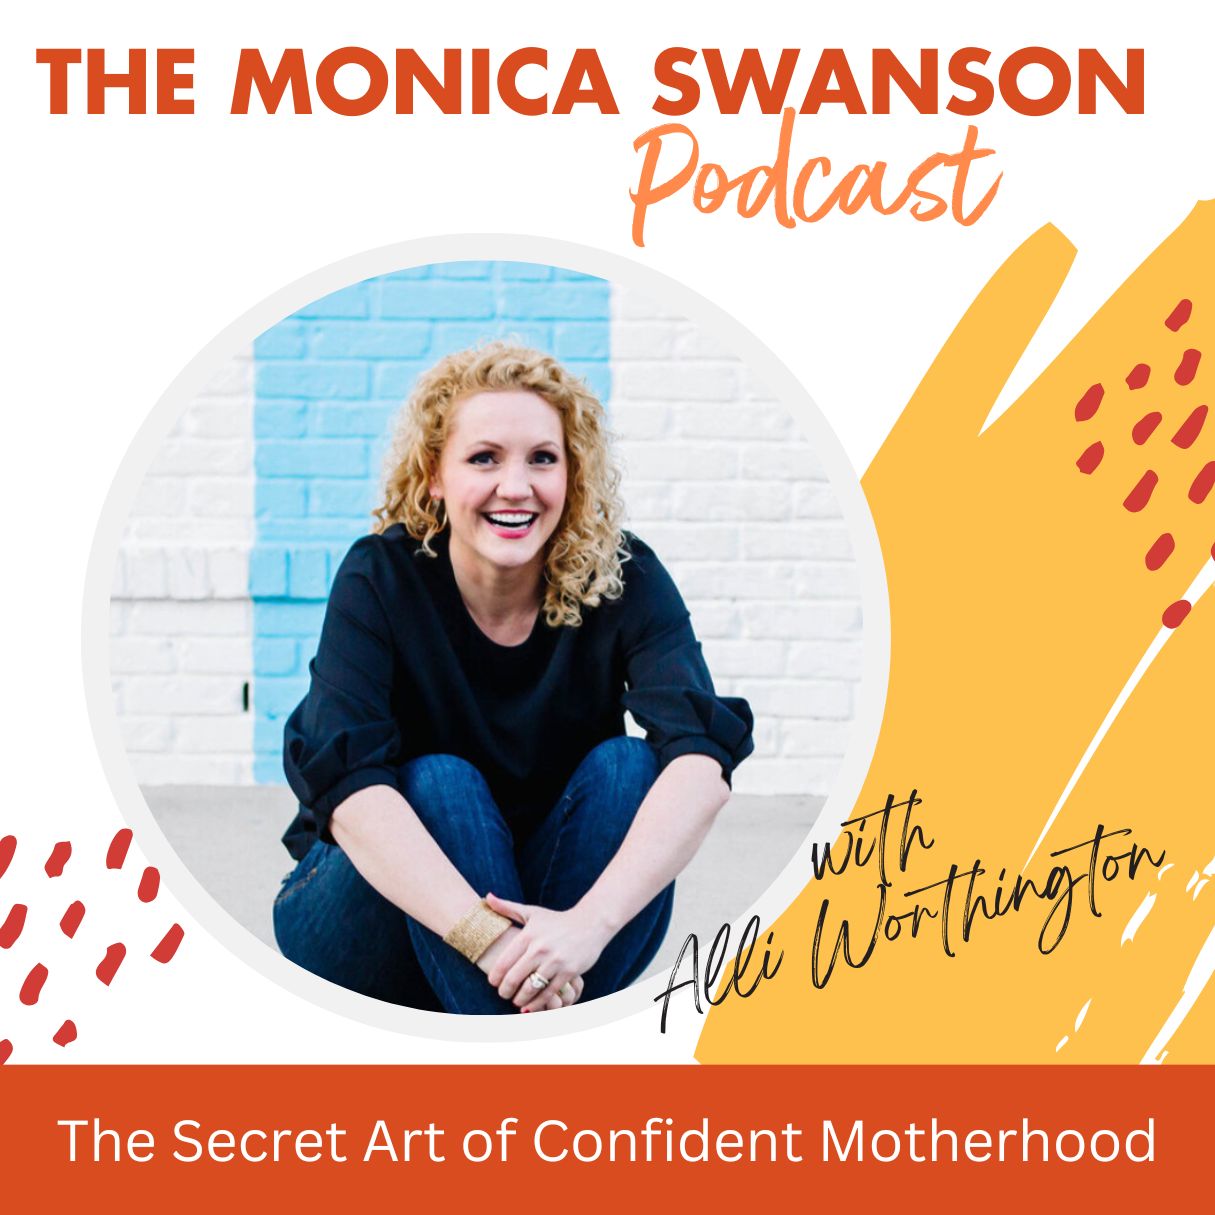 The Secret Art of Confident Motherhood with Alli Worthington